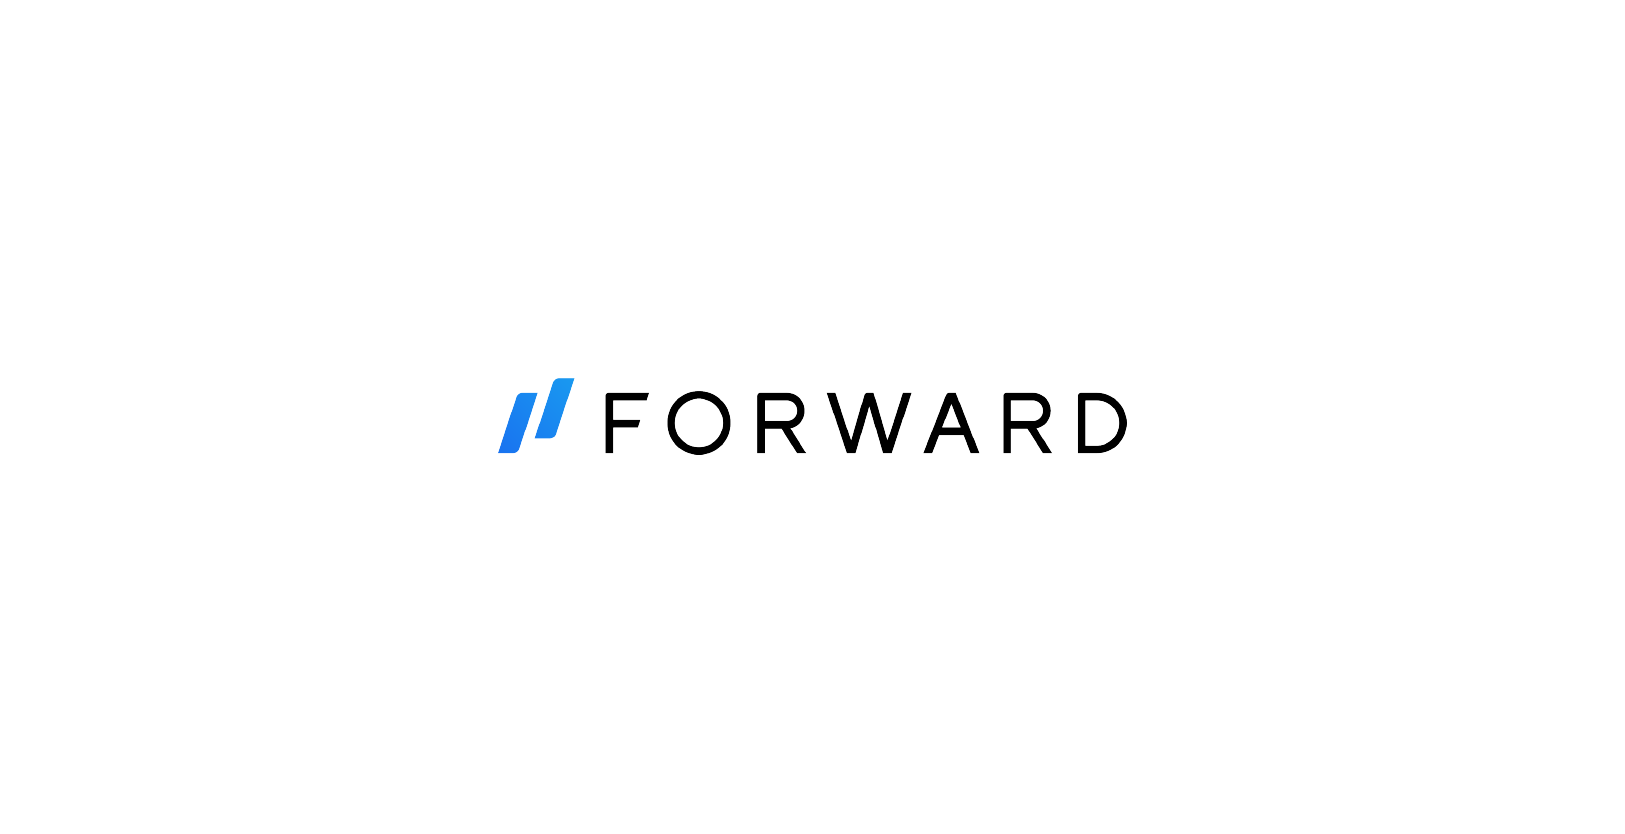 Vision Fund investment portfolio company Forward's logo